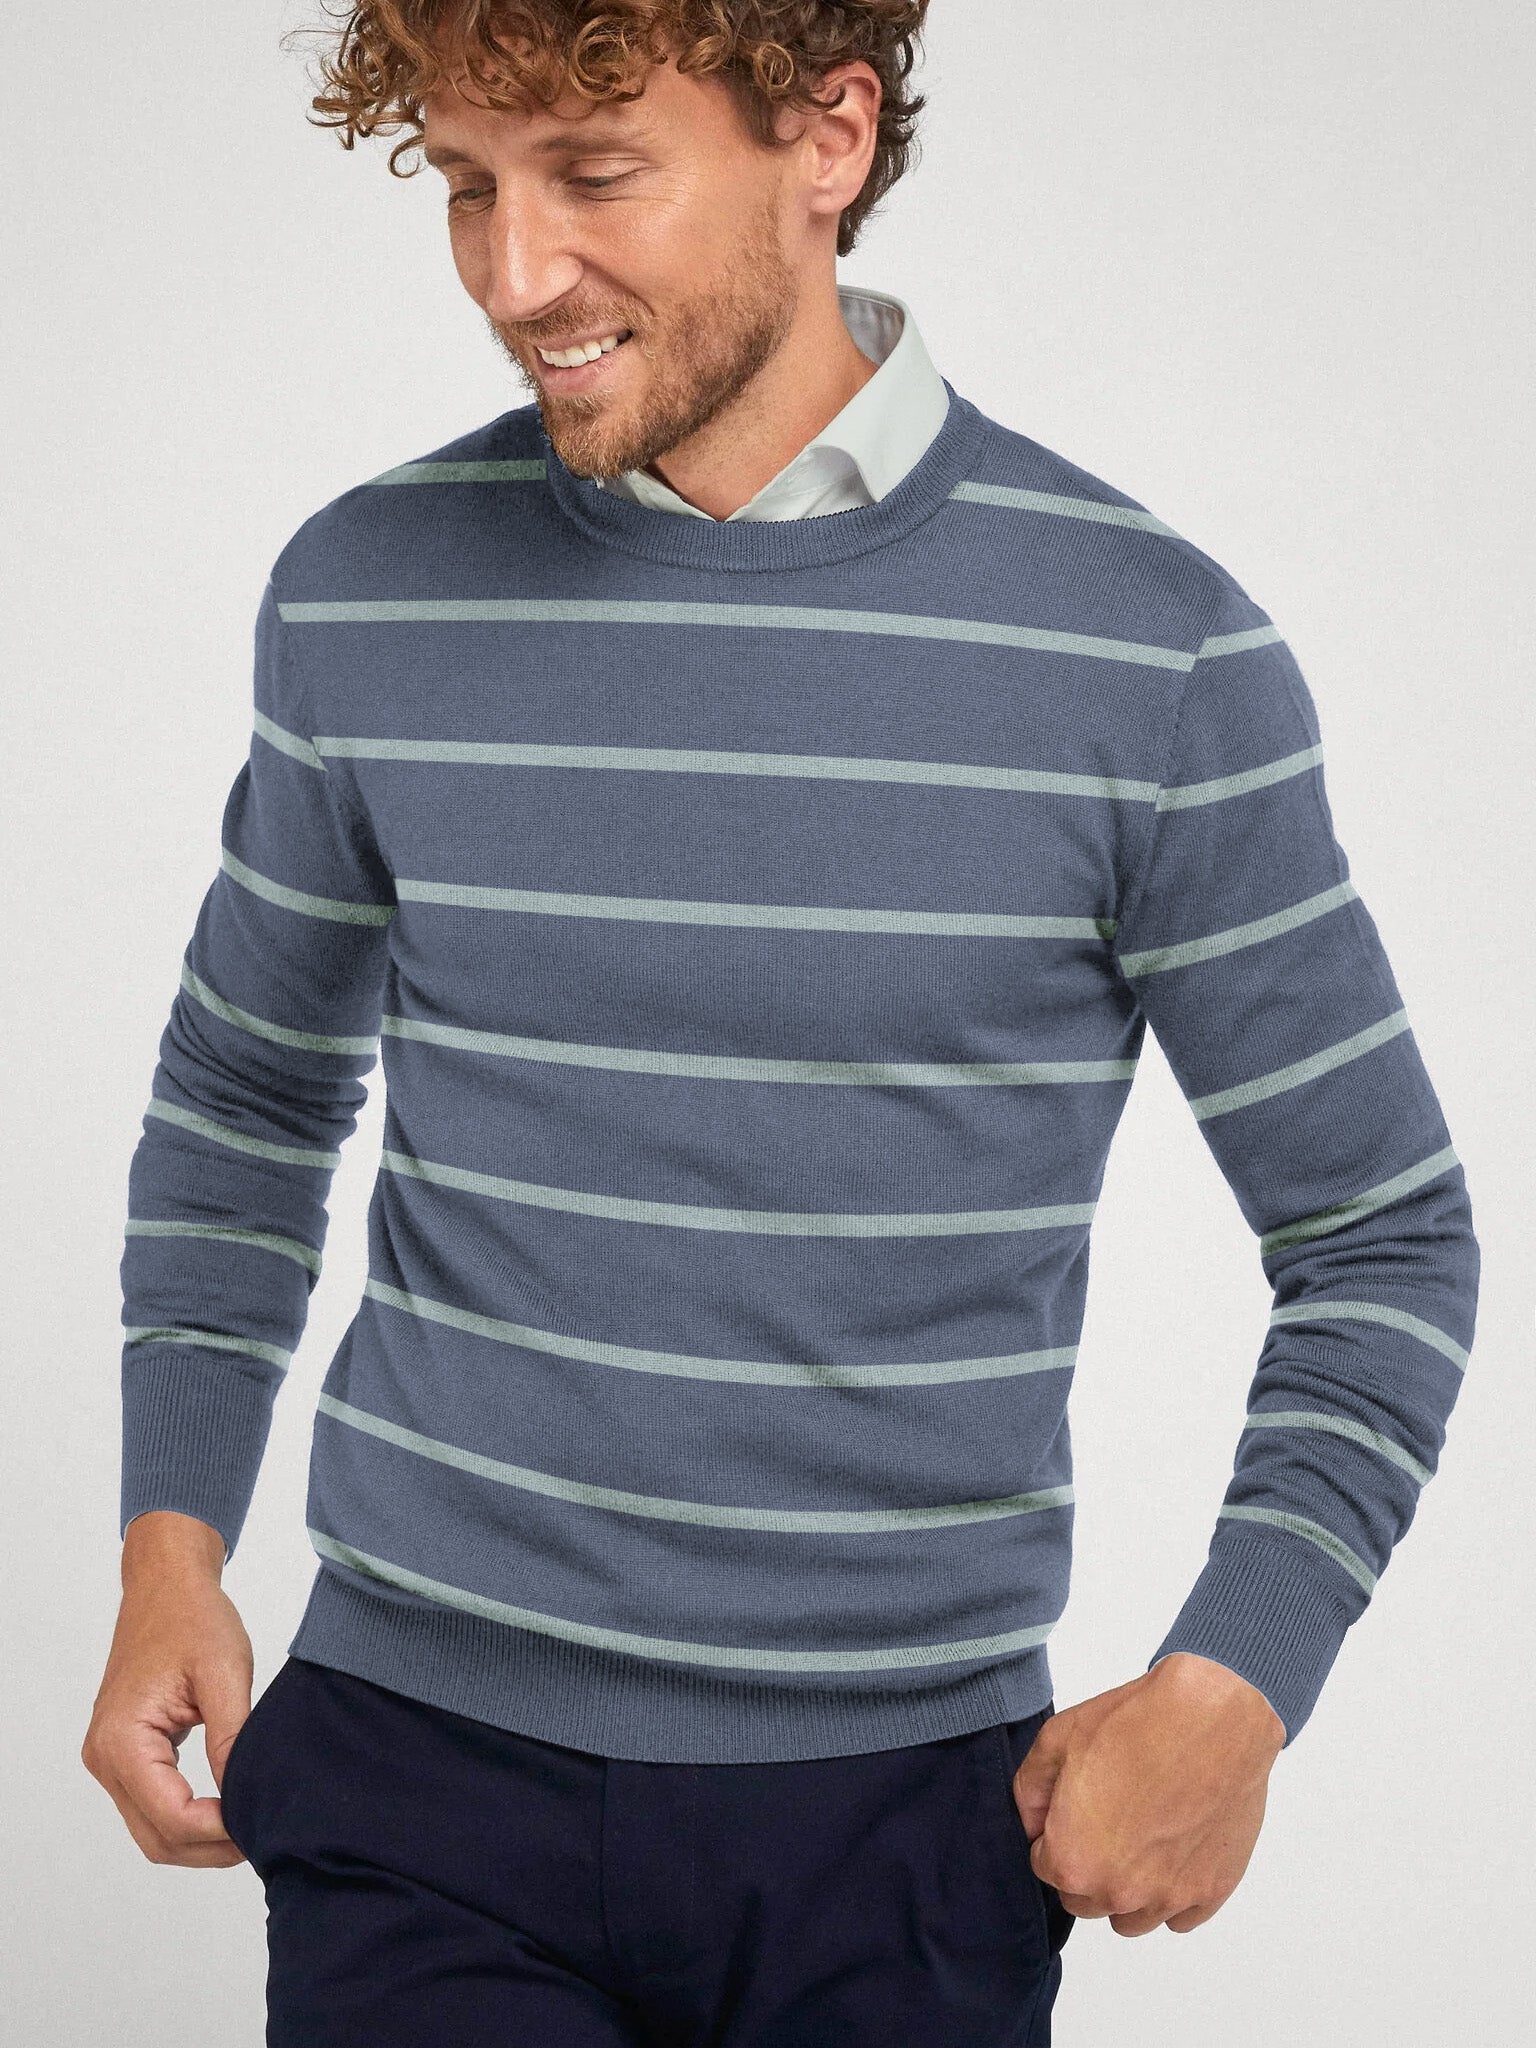 Baleno Crew Neck Inner Shirt Style Wool Sweatshirt For Men-Slate Grey-BE498